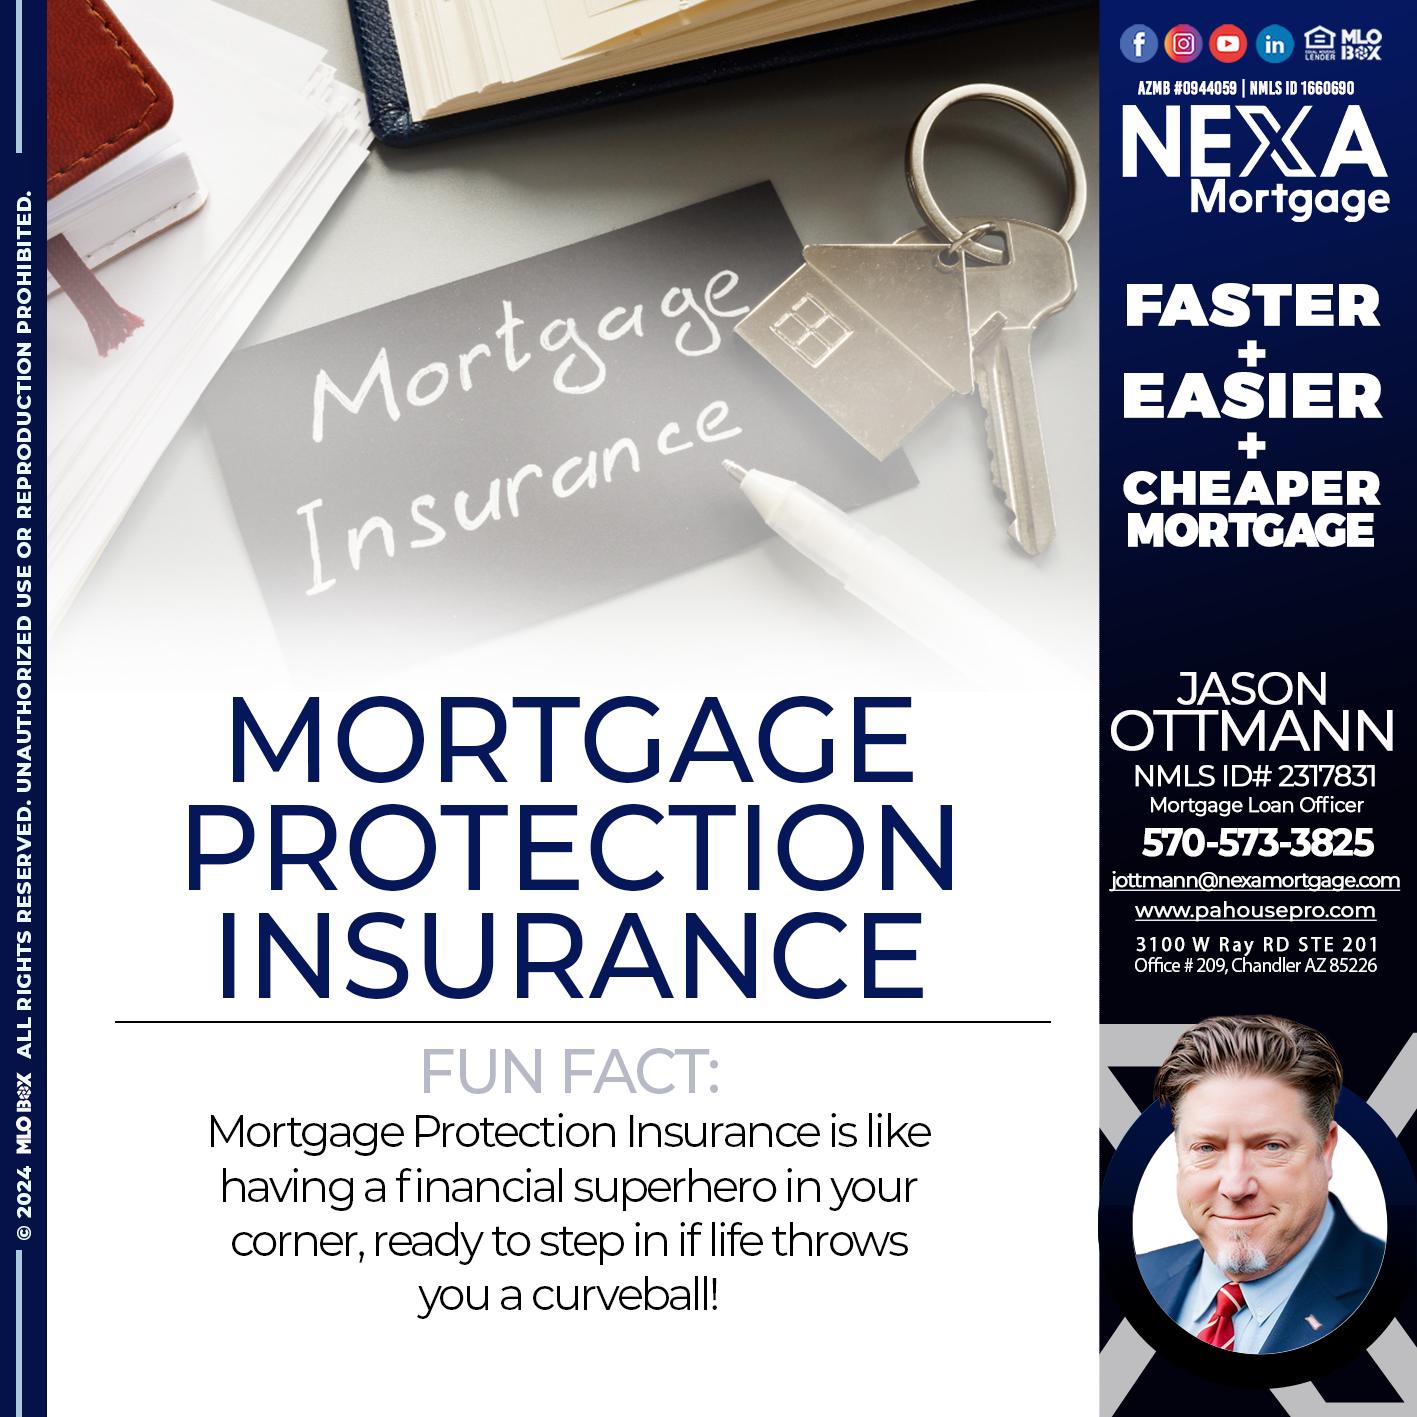 mortgage protection - Jason Ottmann -Mortgage Loan Officer